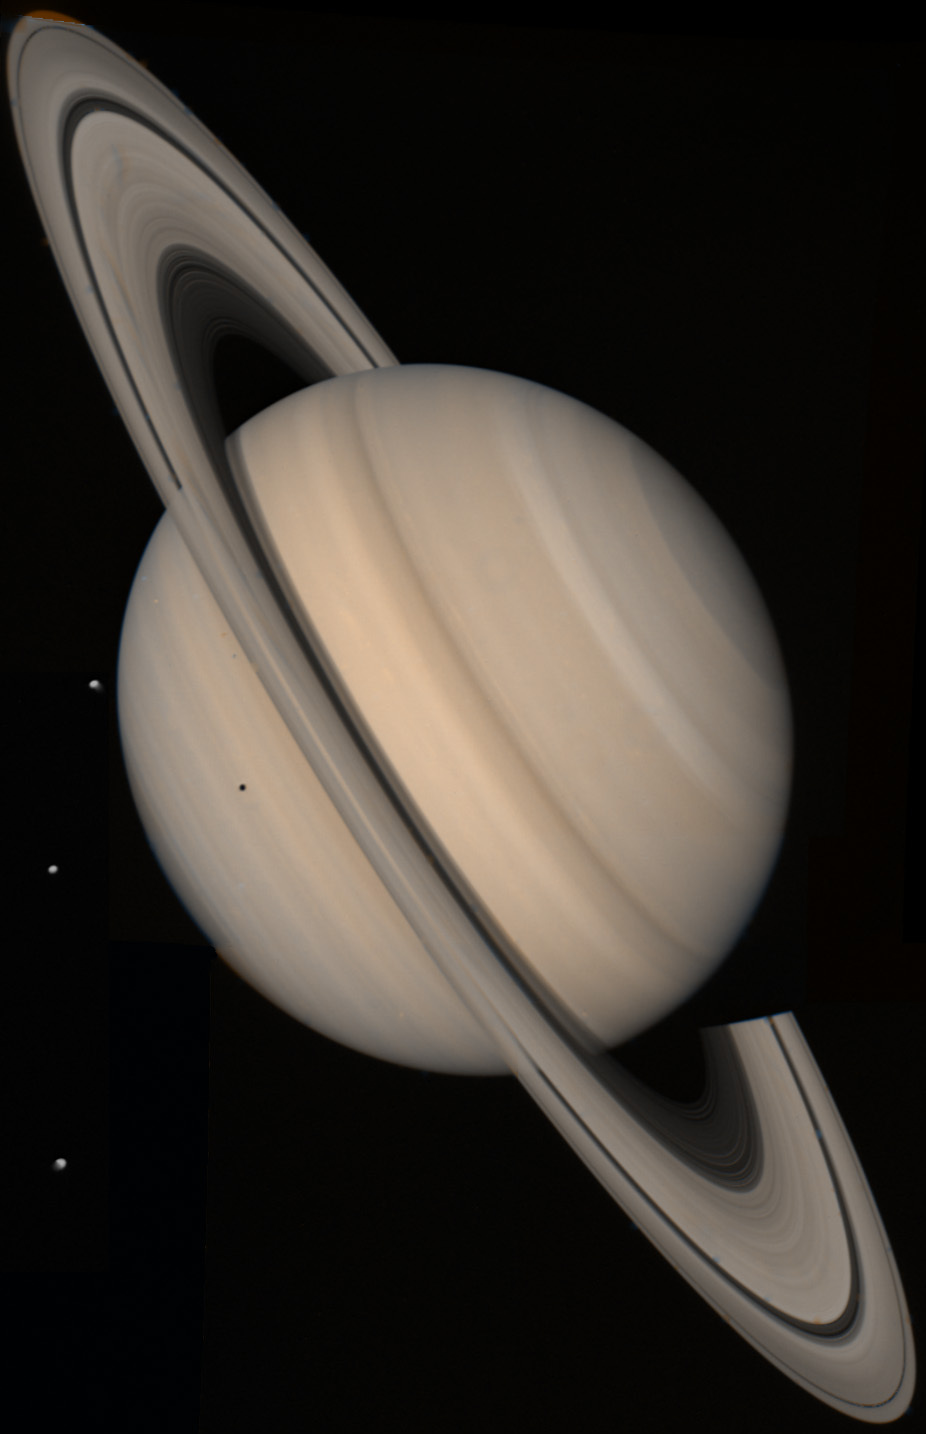 Saturn_(planet)_large